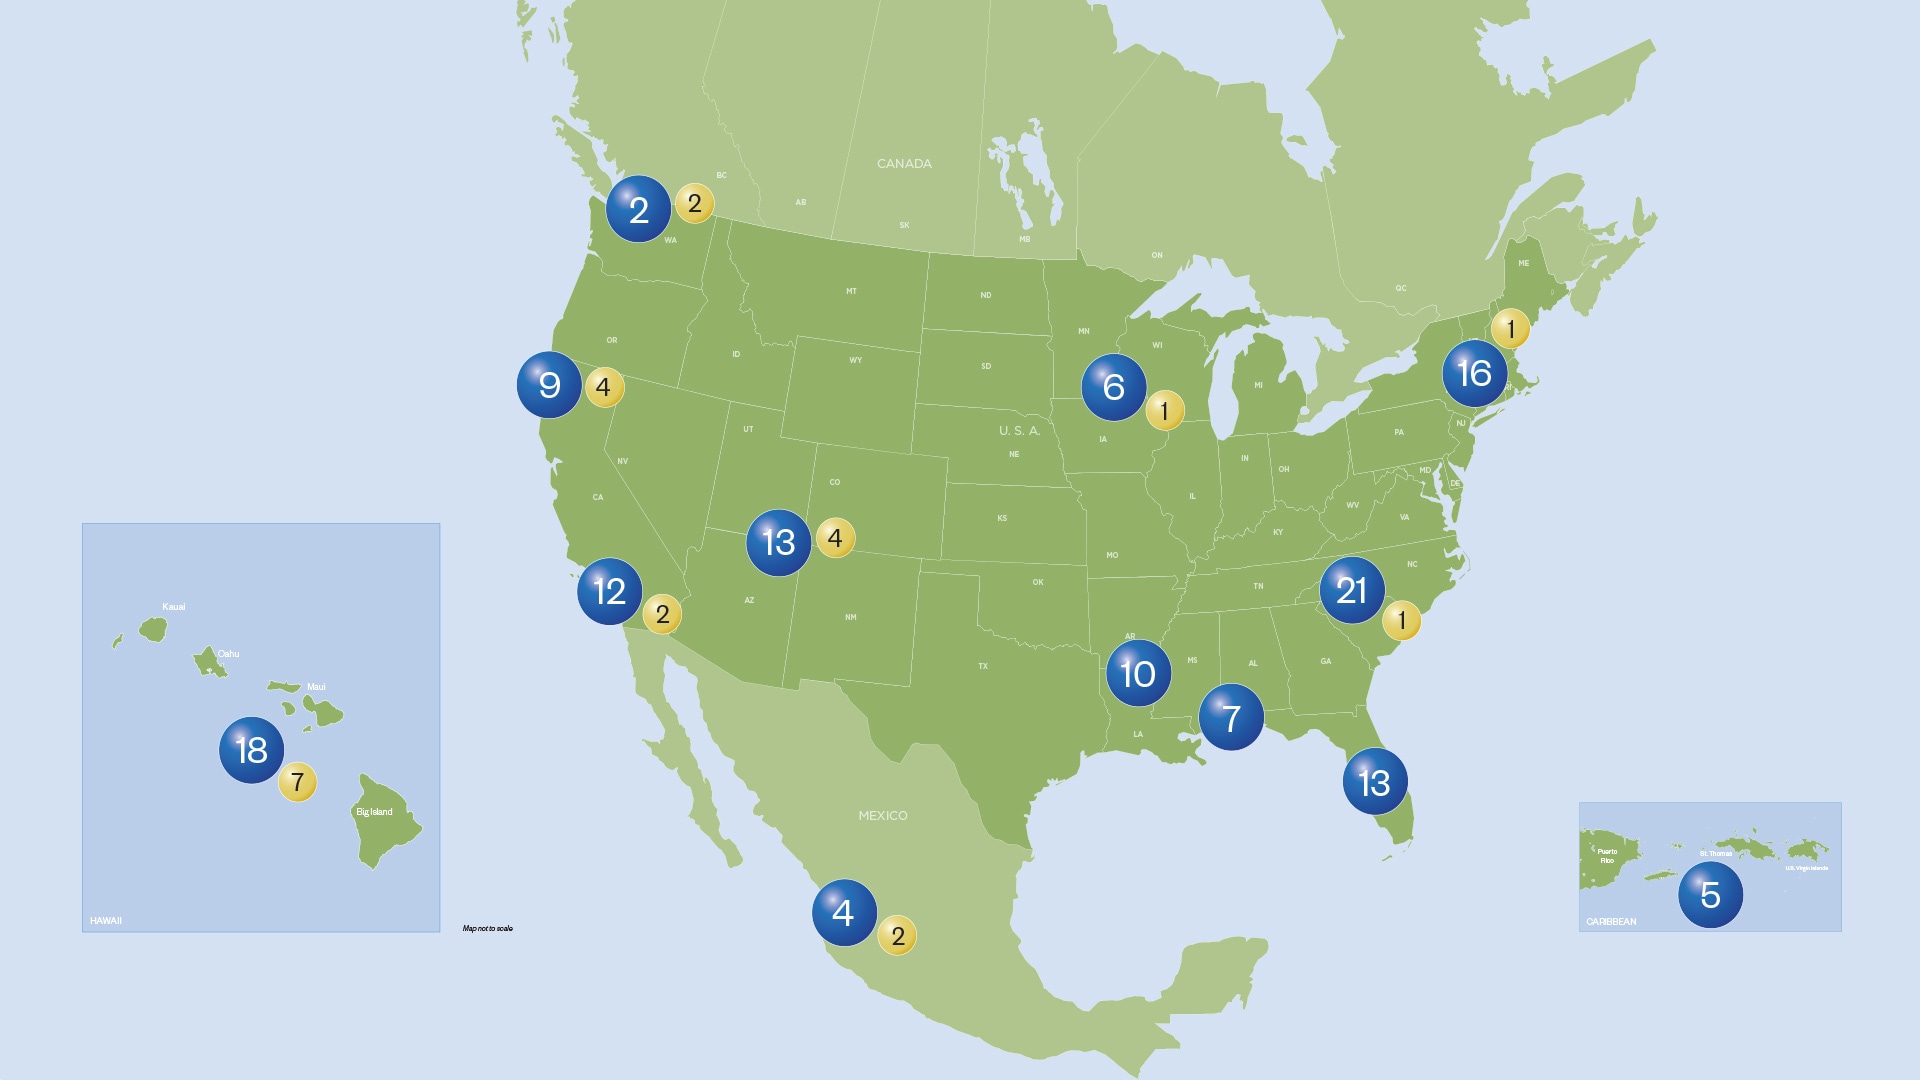 A map of North America showing the Club Wyndham Prefer resort locations.